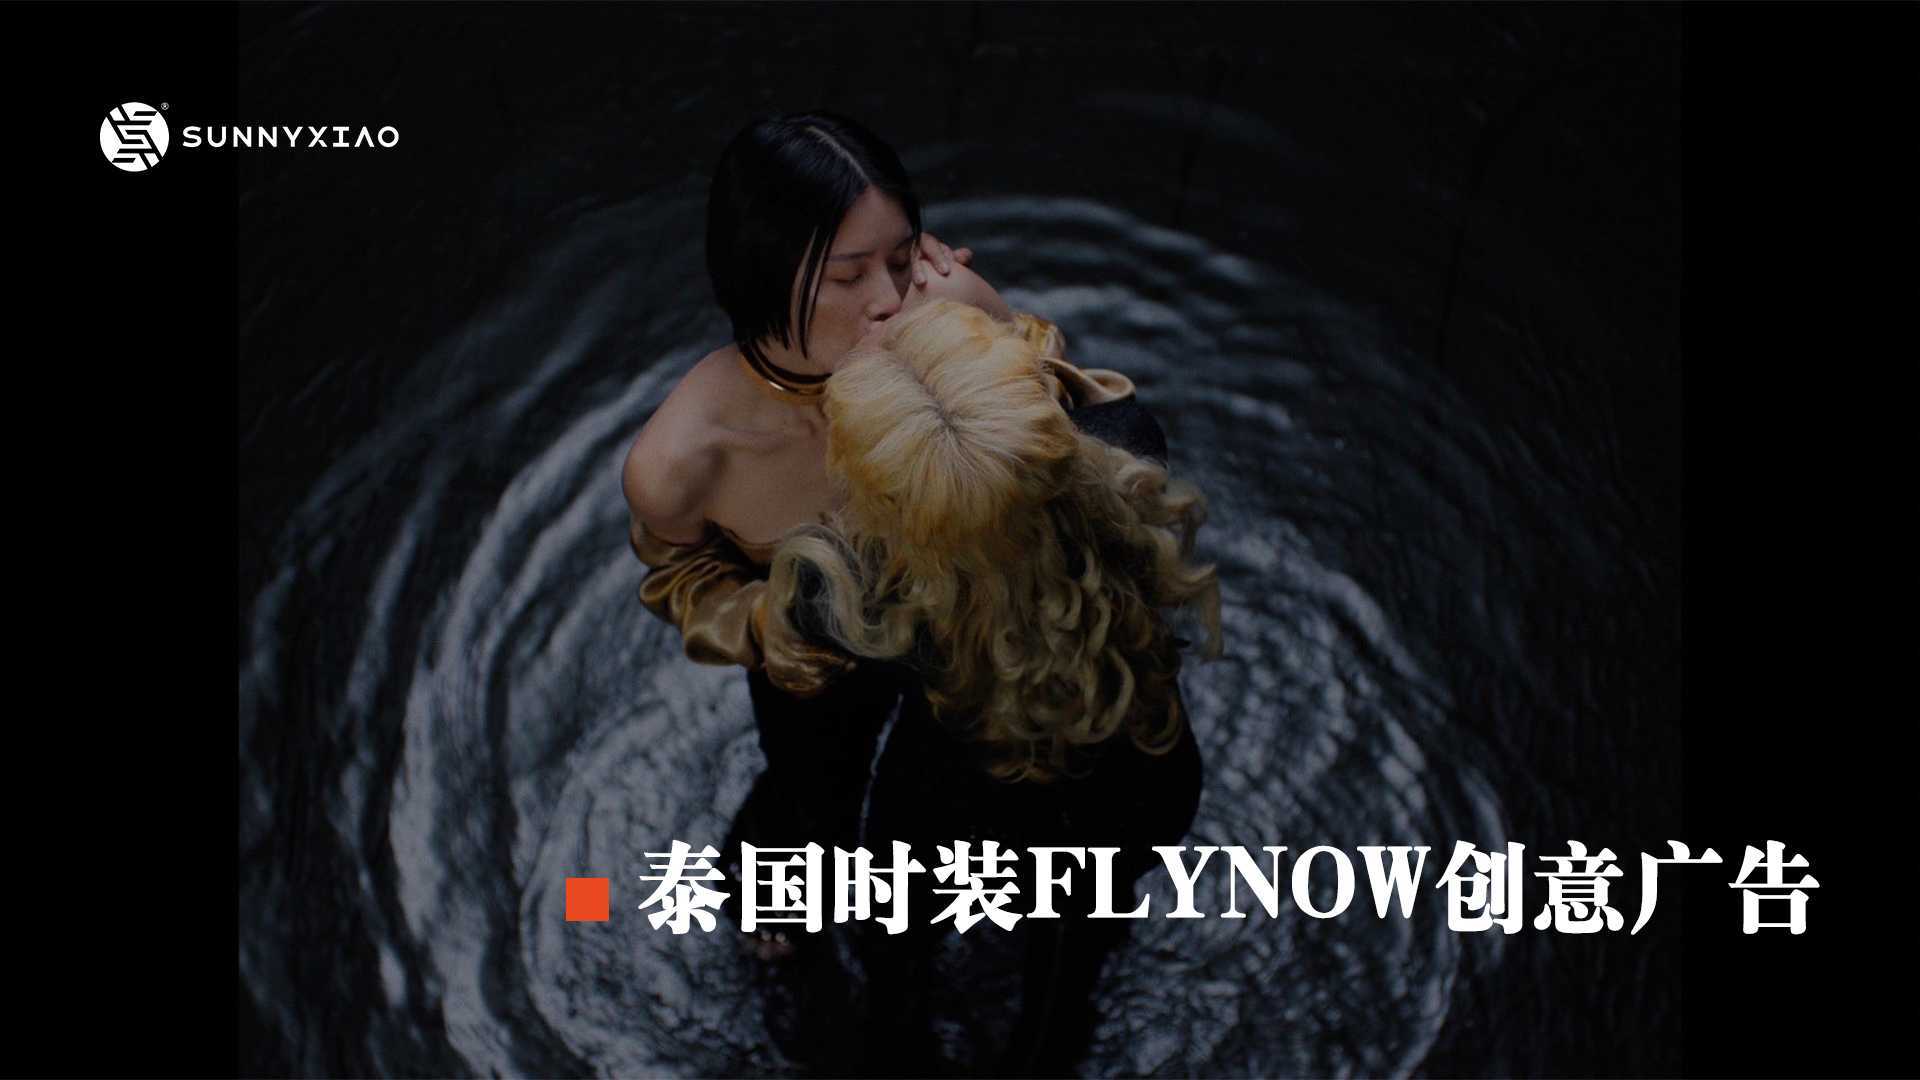 泰国时装品牌FLYNOW创意广告片段